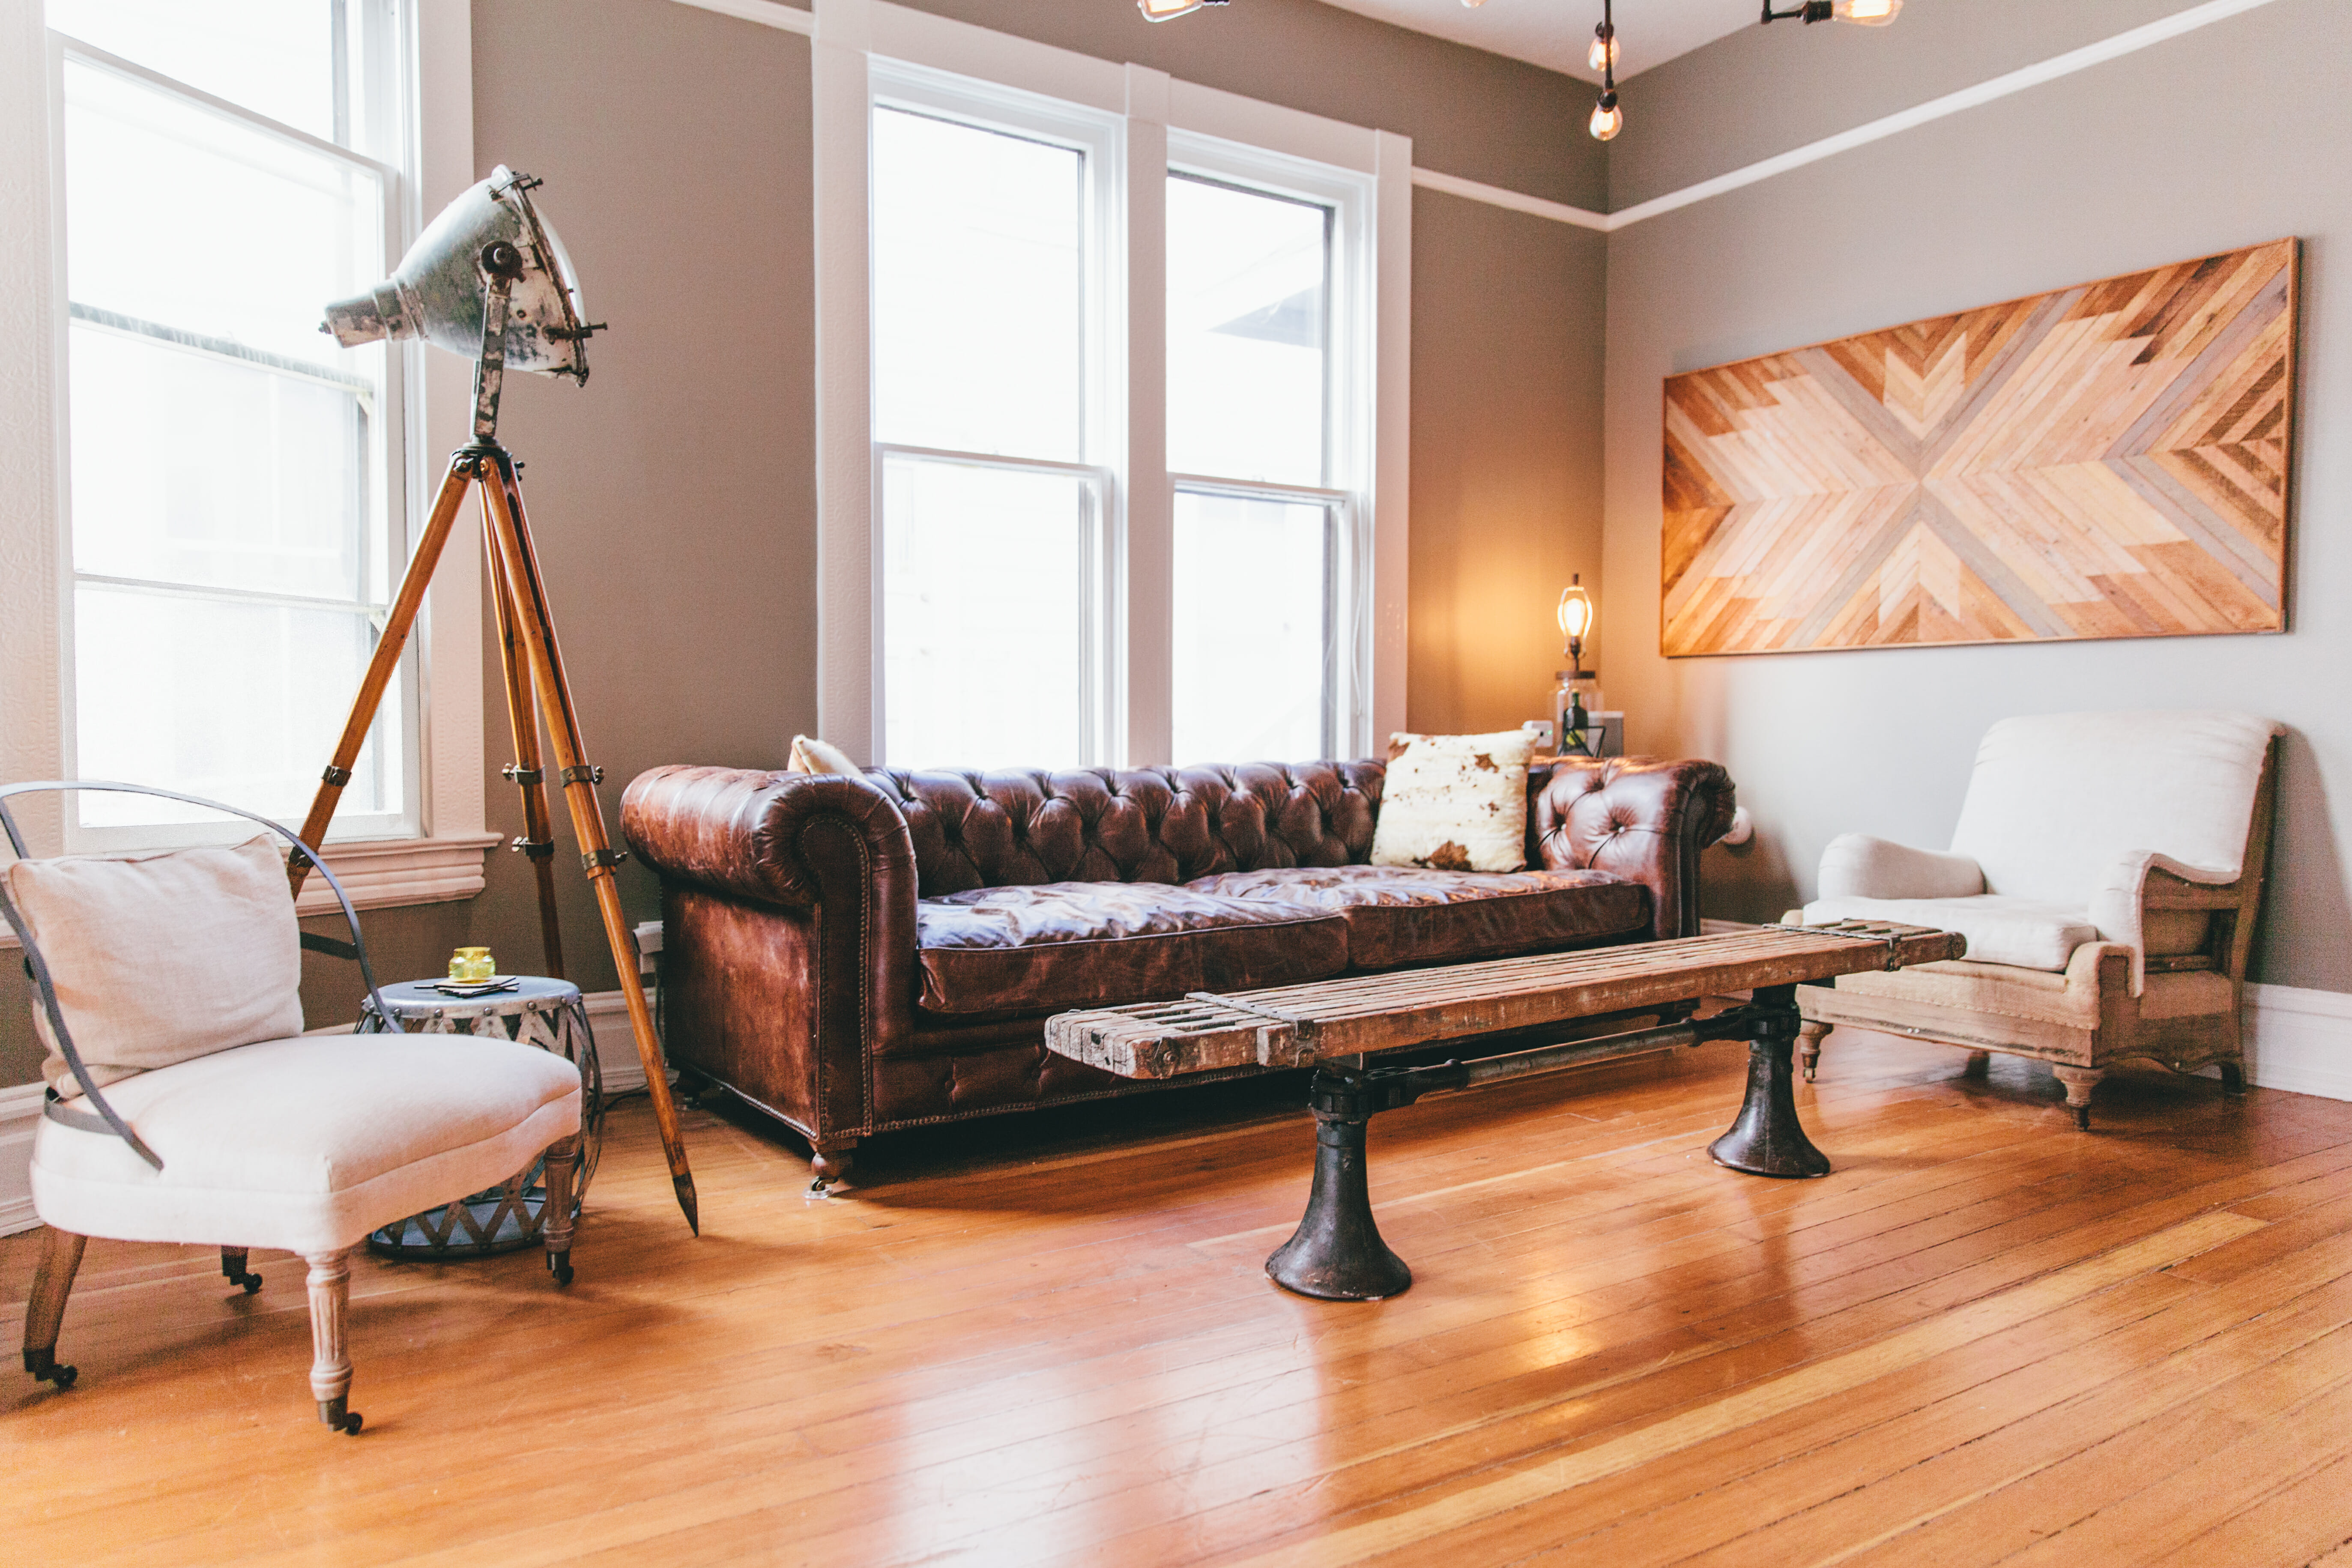 120 Best DIY Rustic Home Decor | Diy rustic decor, Diy rustic home, Home  decor tips